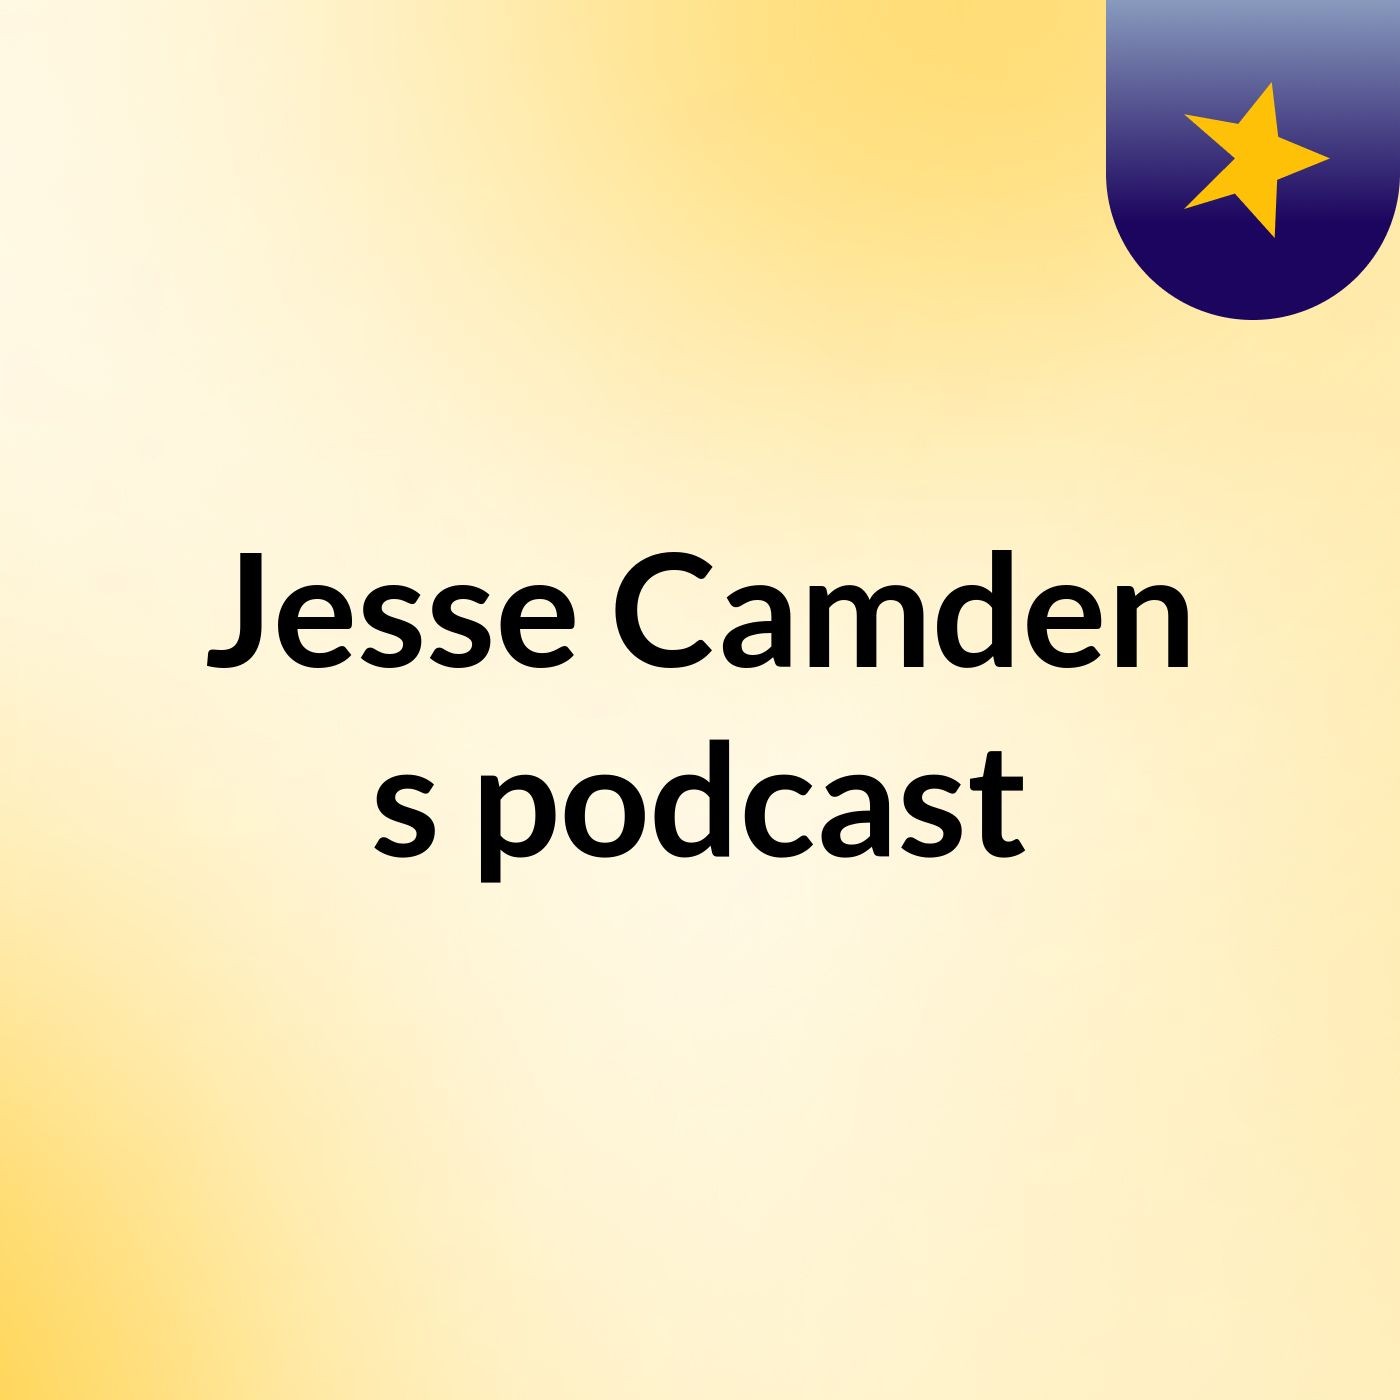 Episode 3 - Jesse Camden's podcast